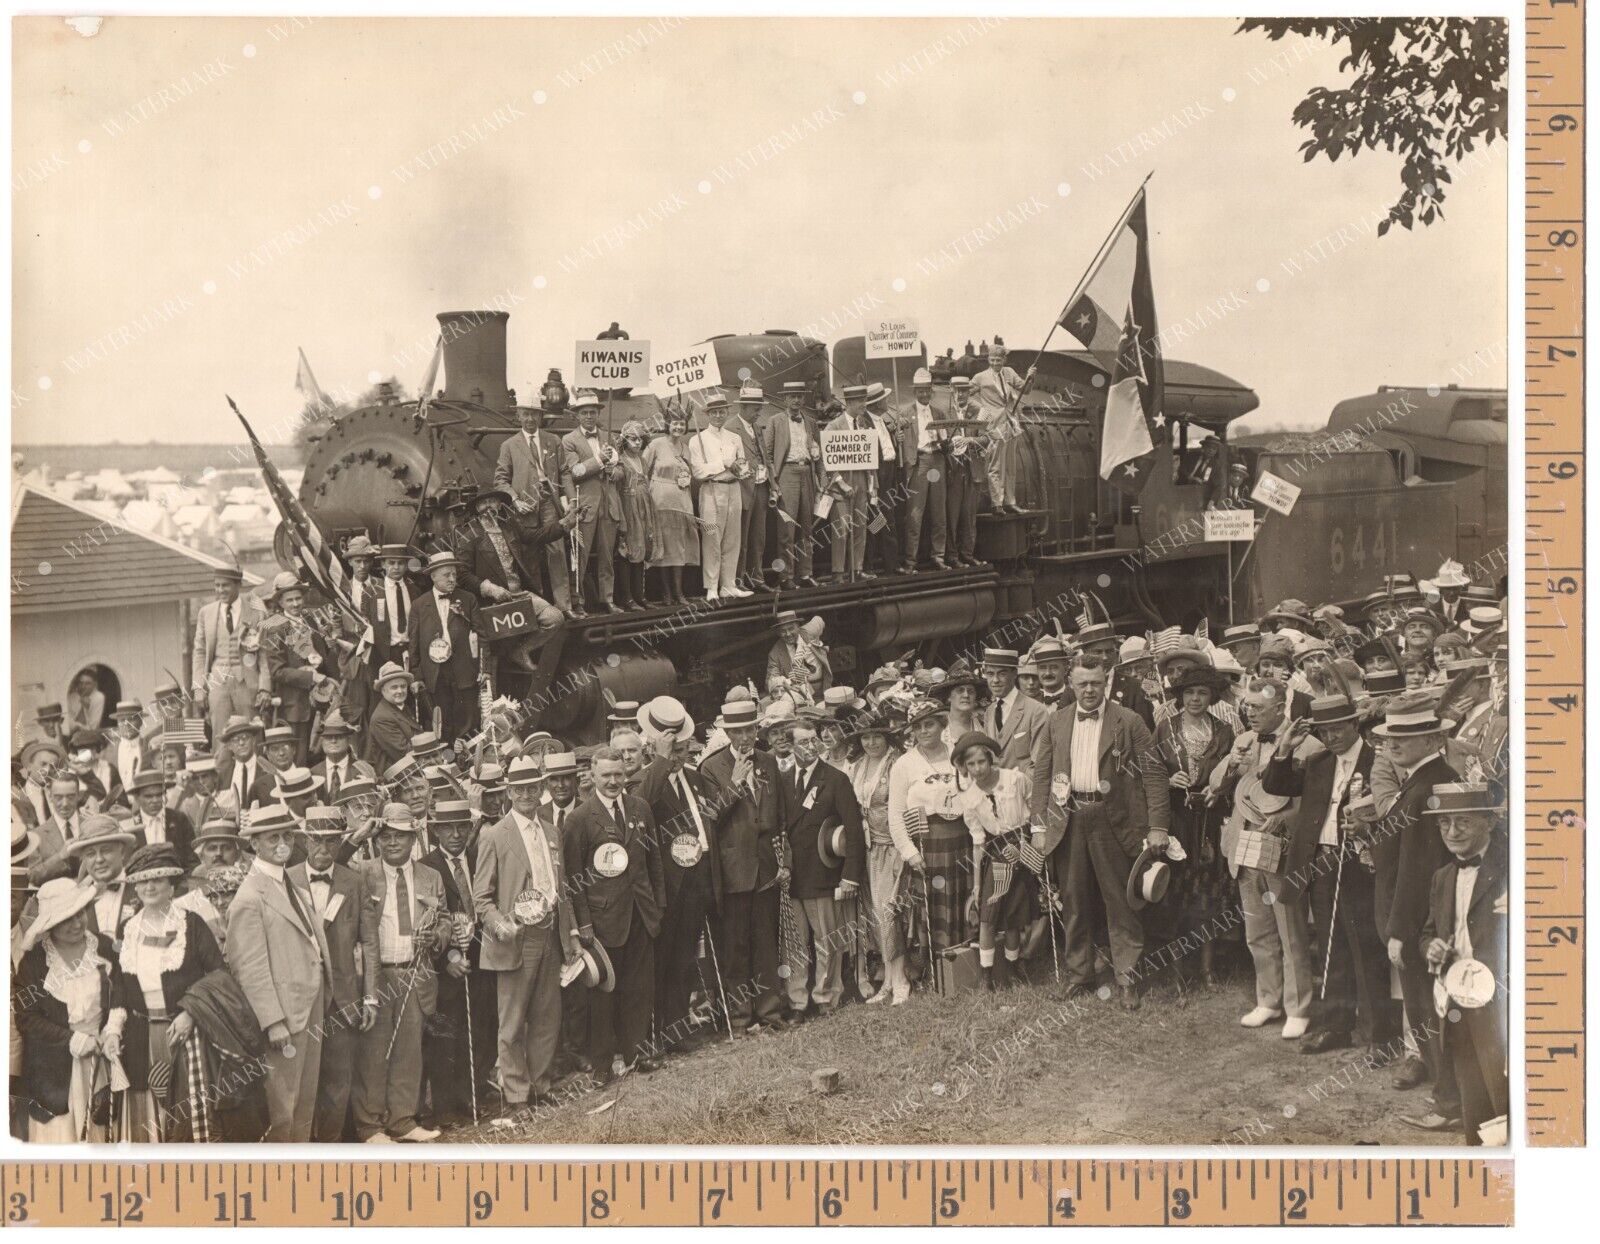 1921 MISSOURI CENTENNIAL EXPOSITION & STATE FAIR Press Photo of RECEPTION TRAIN